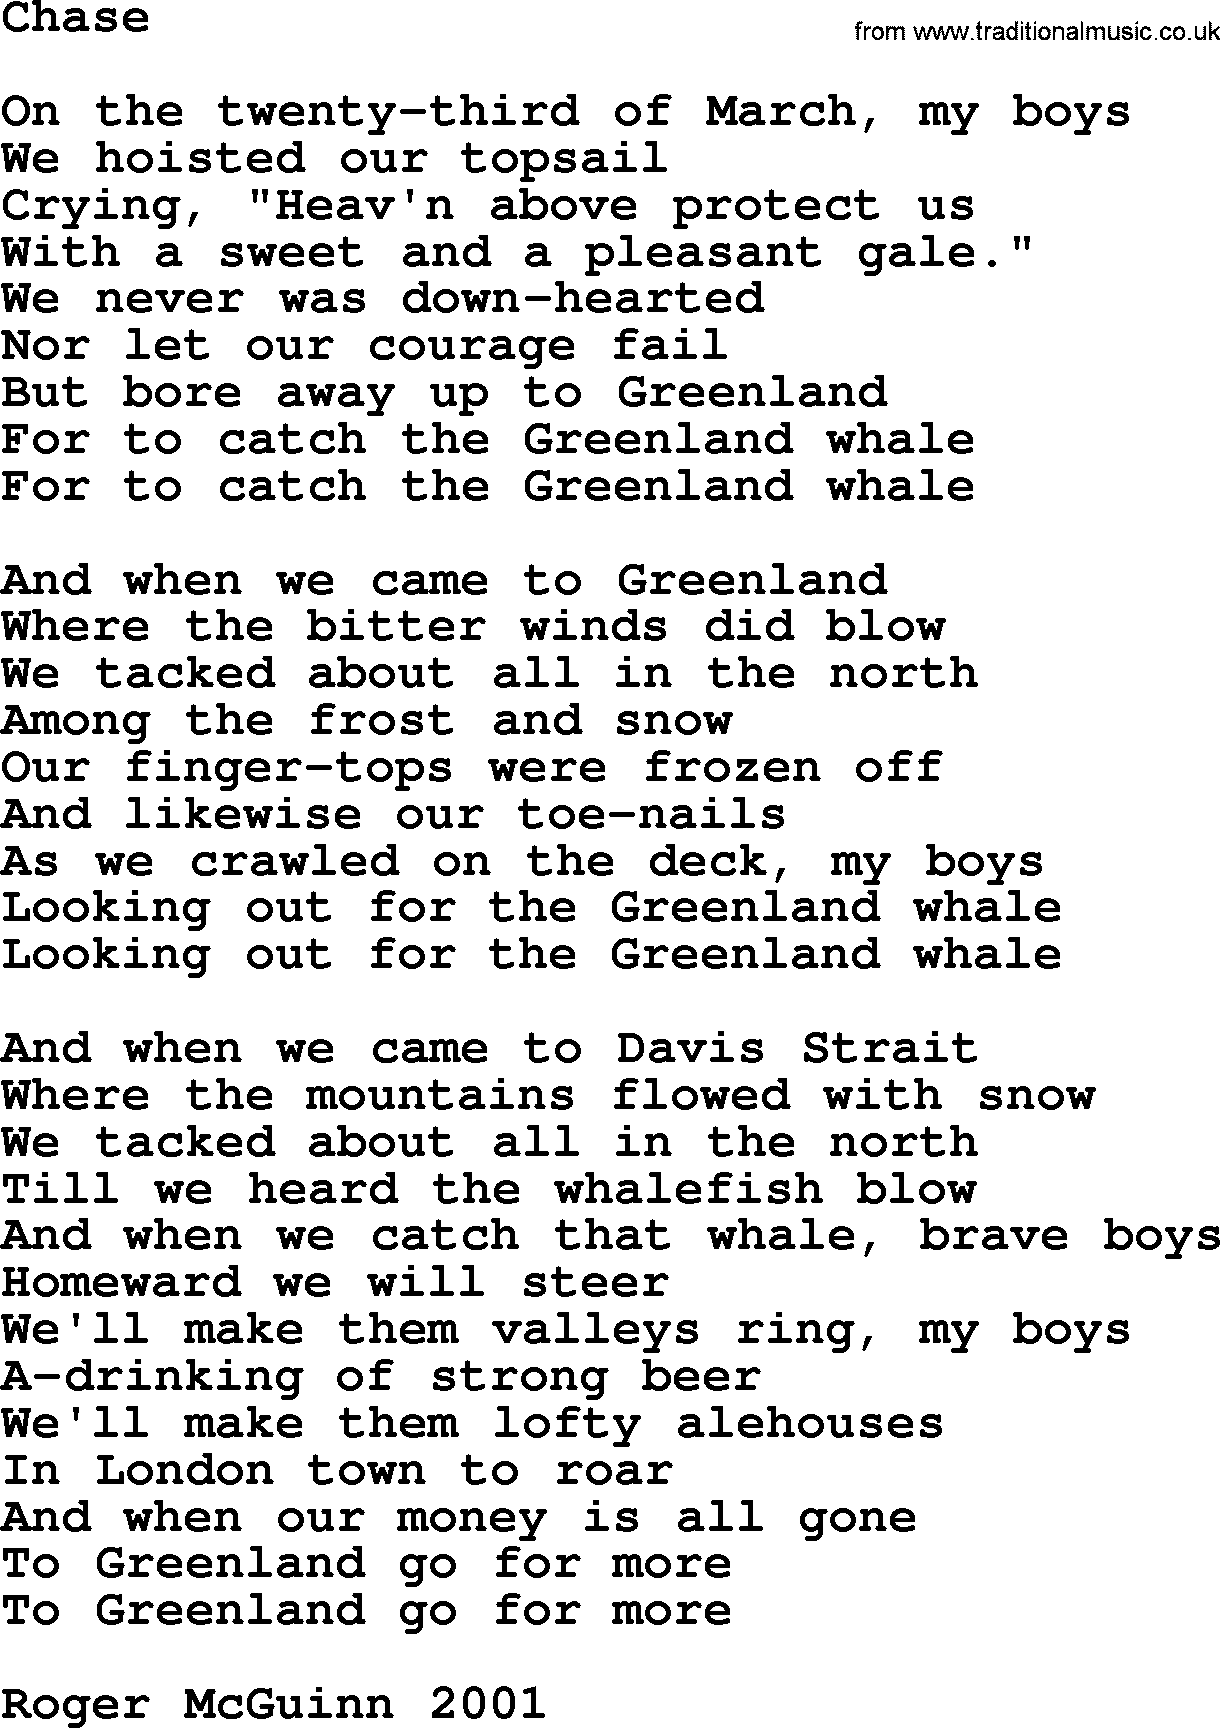 The Byrds song Chase, lyrics